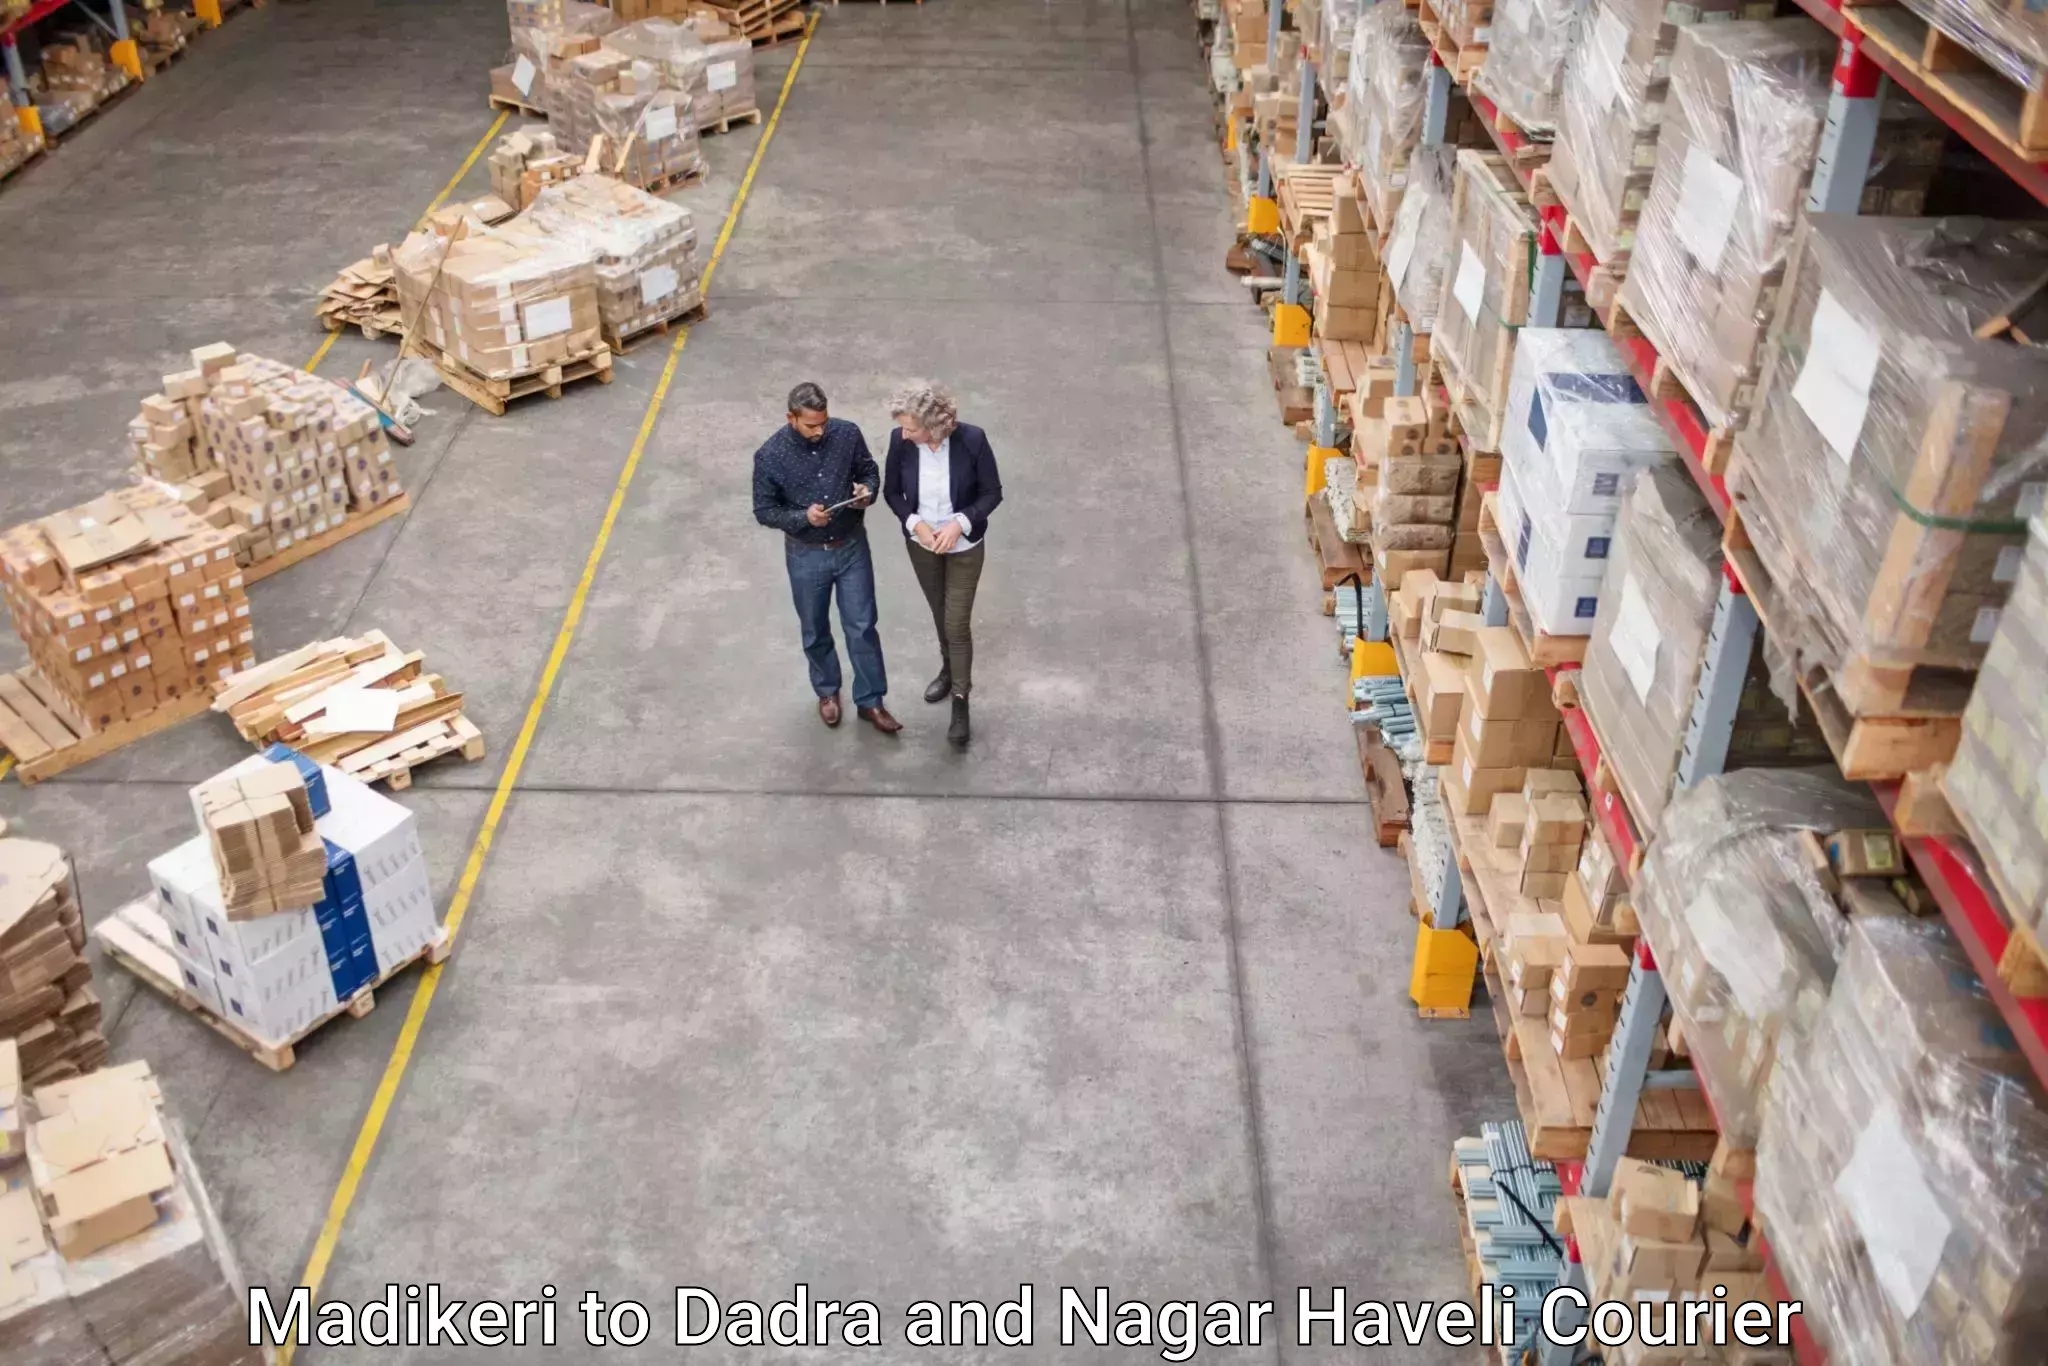 Tech-enabled shipping Madikeri to Silvassa